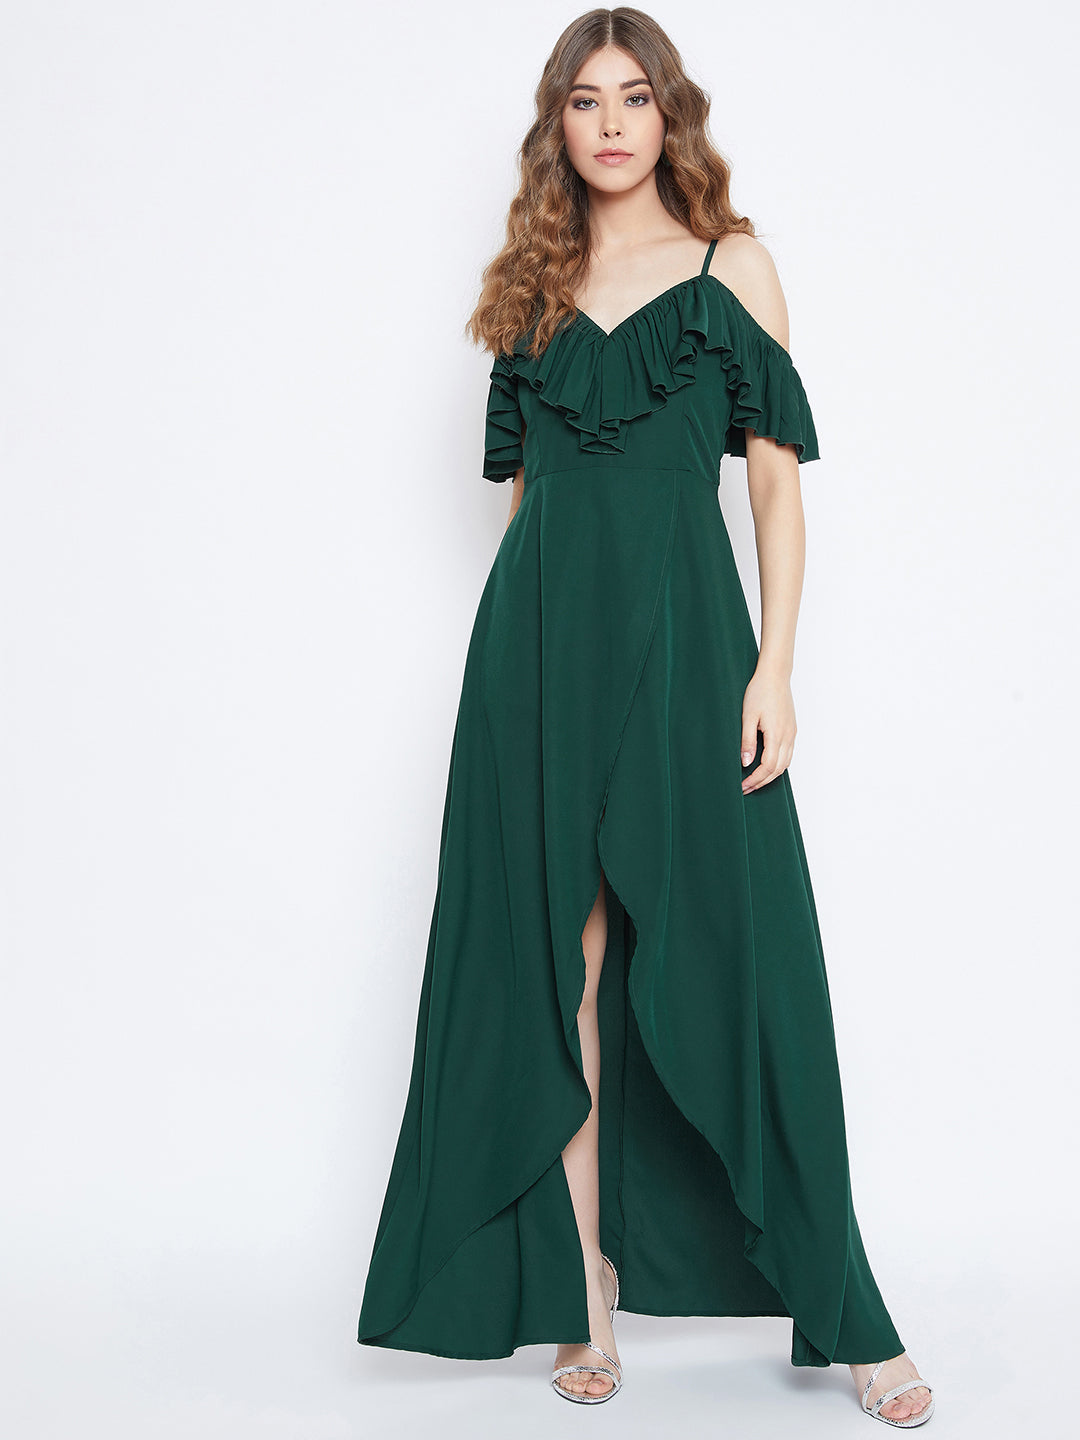 Berrylush Women Solid Dark Green V-Neck Thigh-High Slit Frilled Maxi Dress